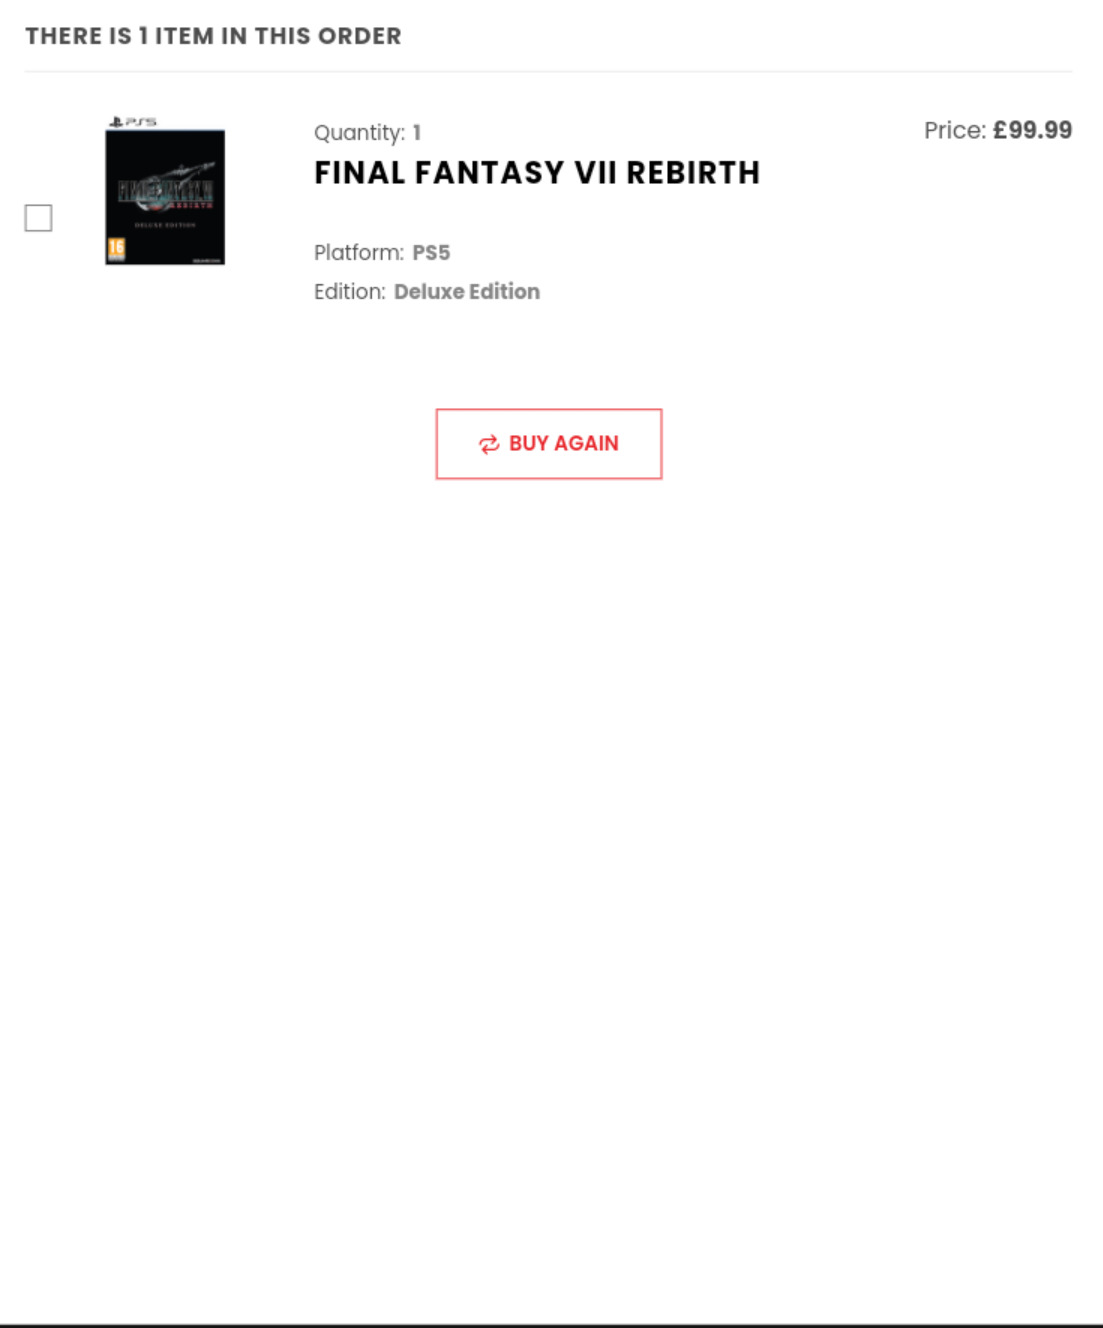 Final Fantasy VII Rebirth Deluxe Edition (PS5) with SteelBook